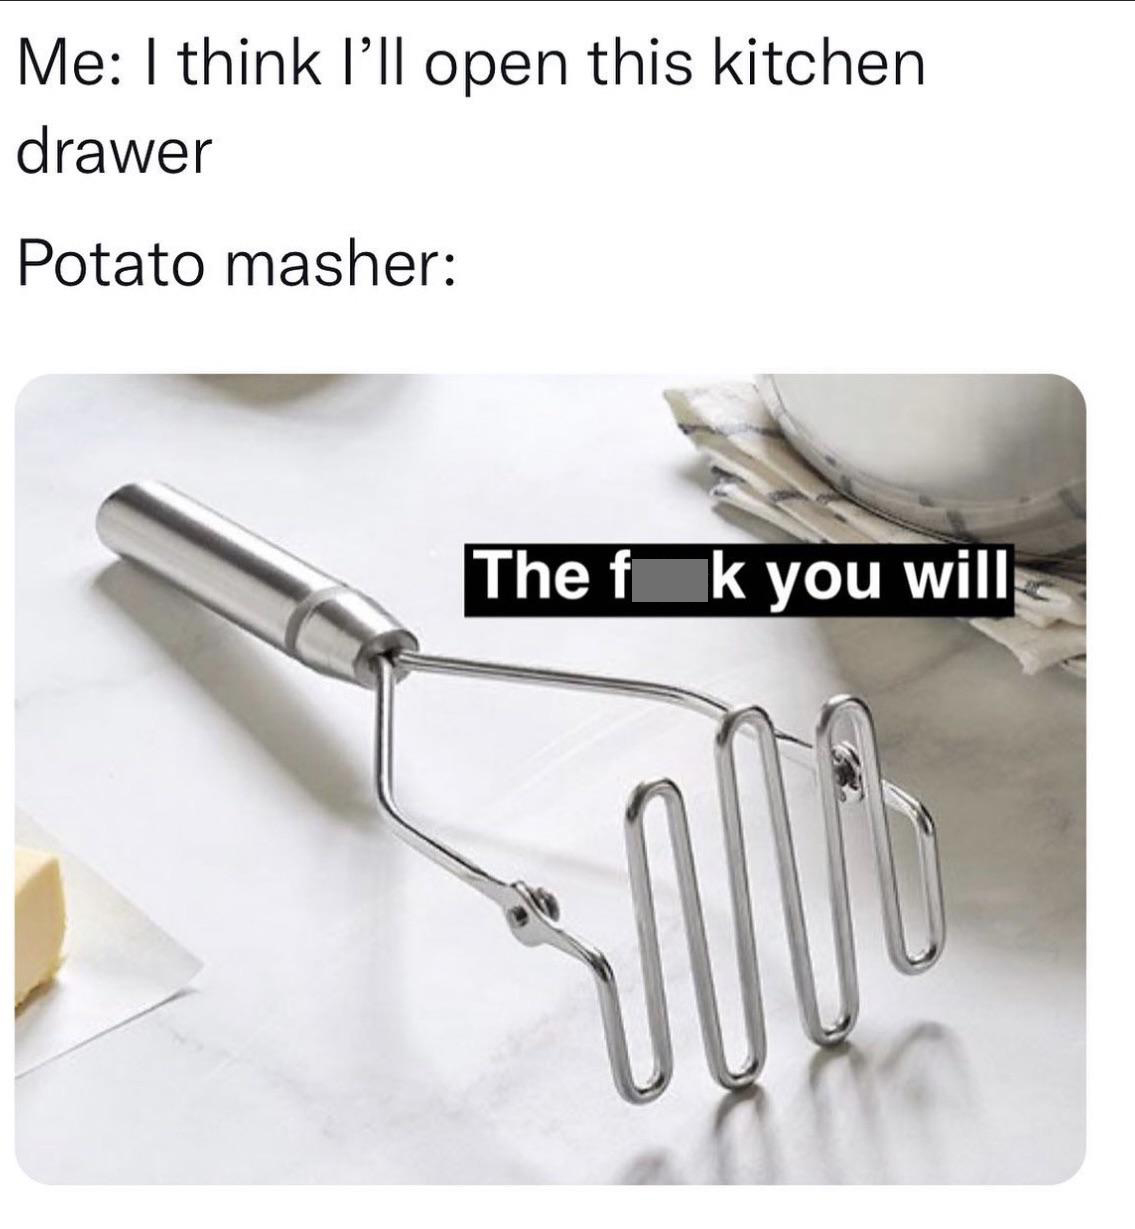 pampered chef potato masher - Me I think I'll open this kitchen drawer Potato masher The fk you will